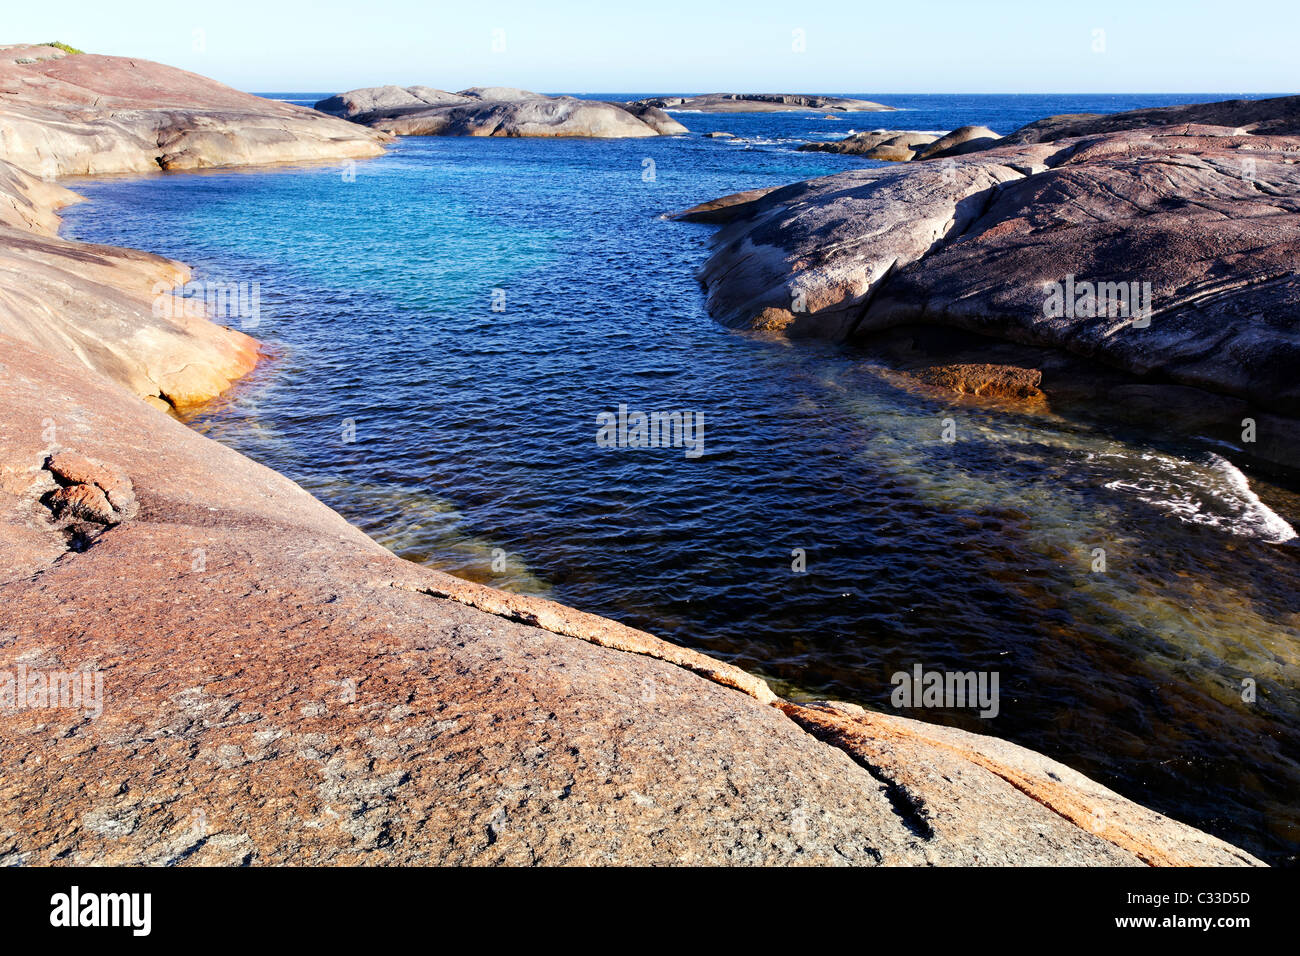 Granite Stone coastline between Elephant Rocks and Greens Pool near Denmark, William Bay National Park, Southwest Australia Stock Photo